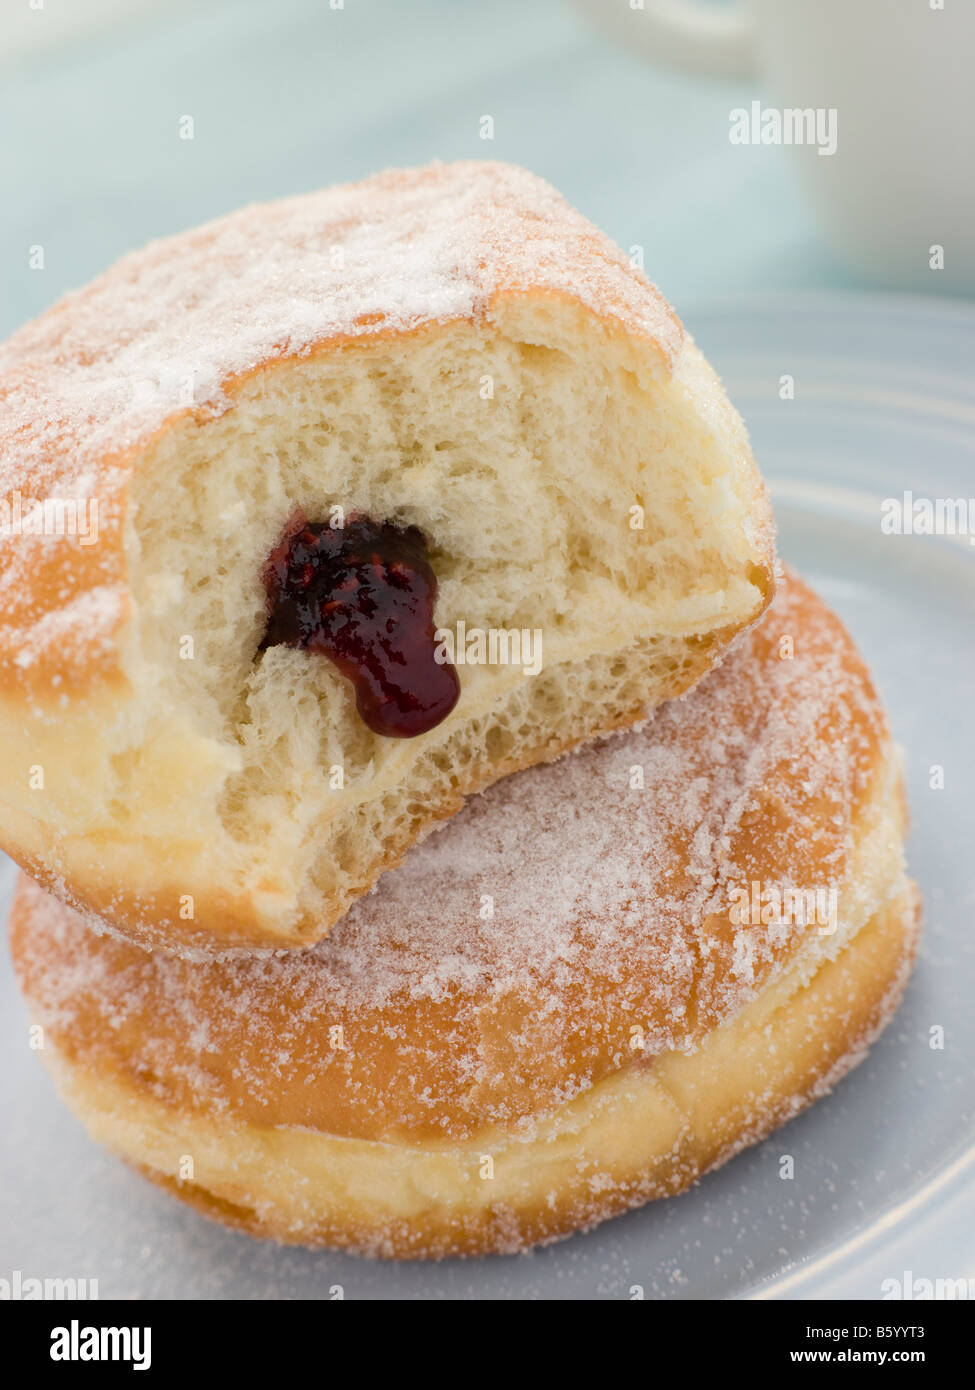 Two Raspberry Jam Doughnuts with a bite Stock Photo